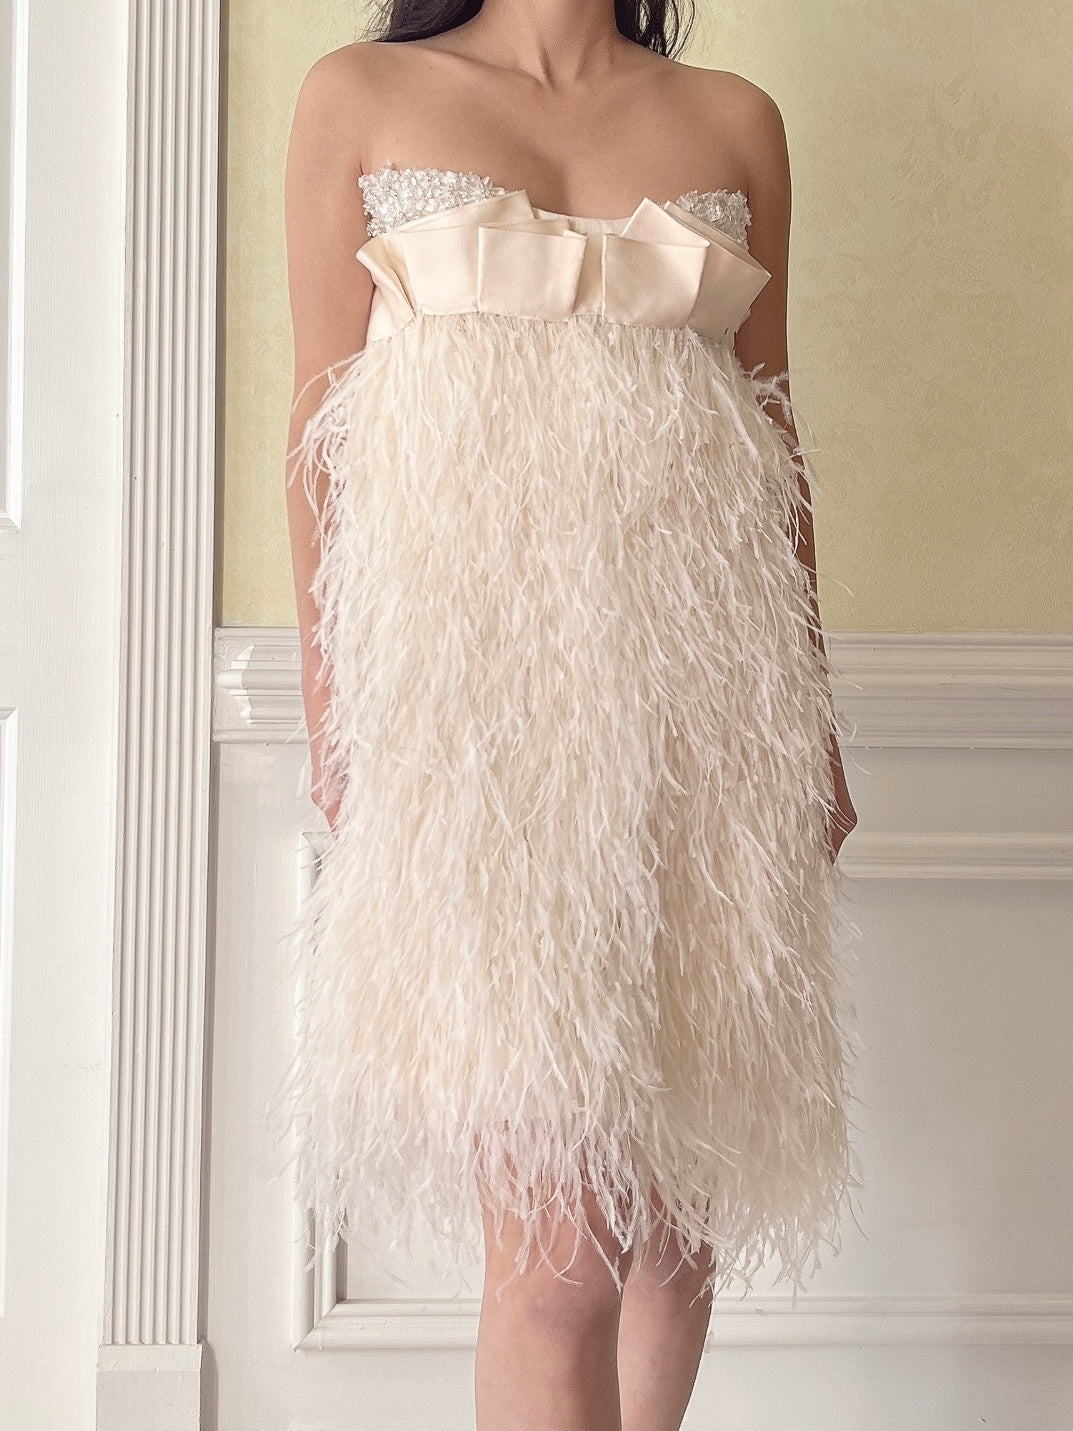 Vintage Jenny Packham Feather Dress - M